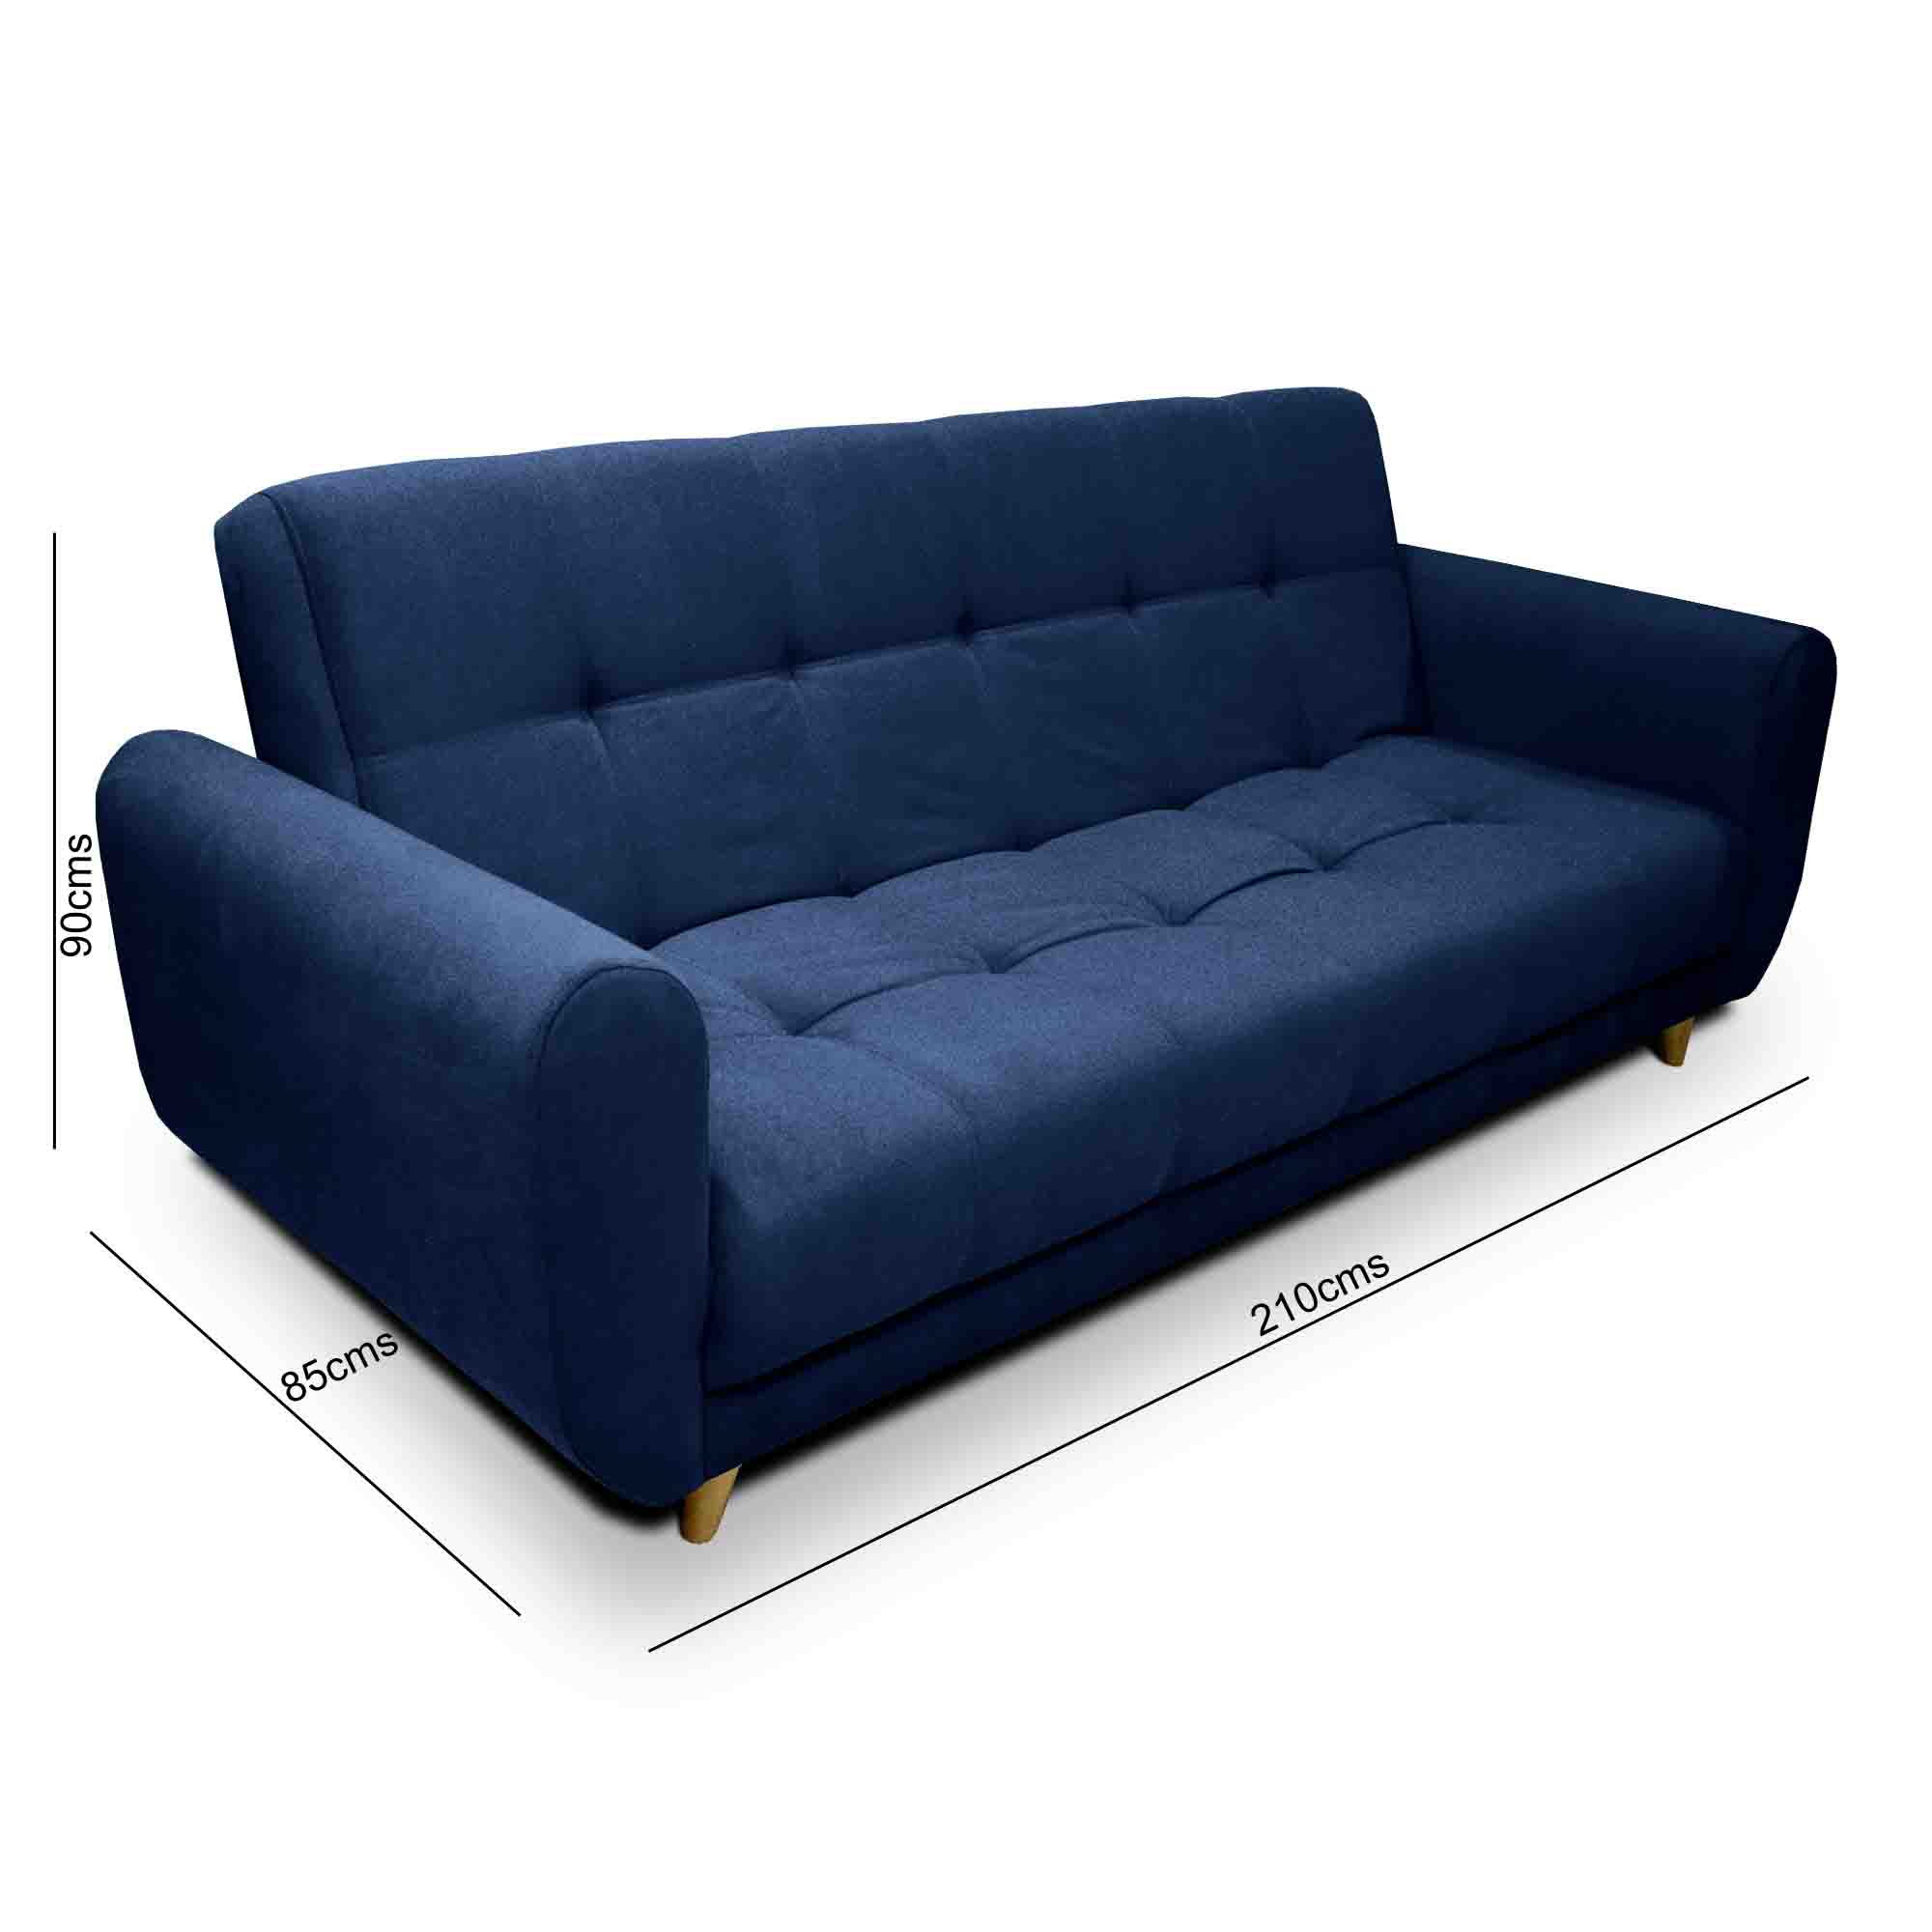 Sofa Cama Comfort Sistema Clic Clac Azul Turqui (3)